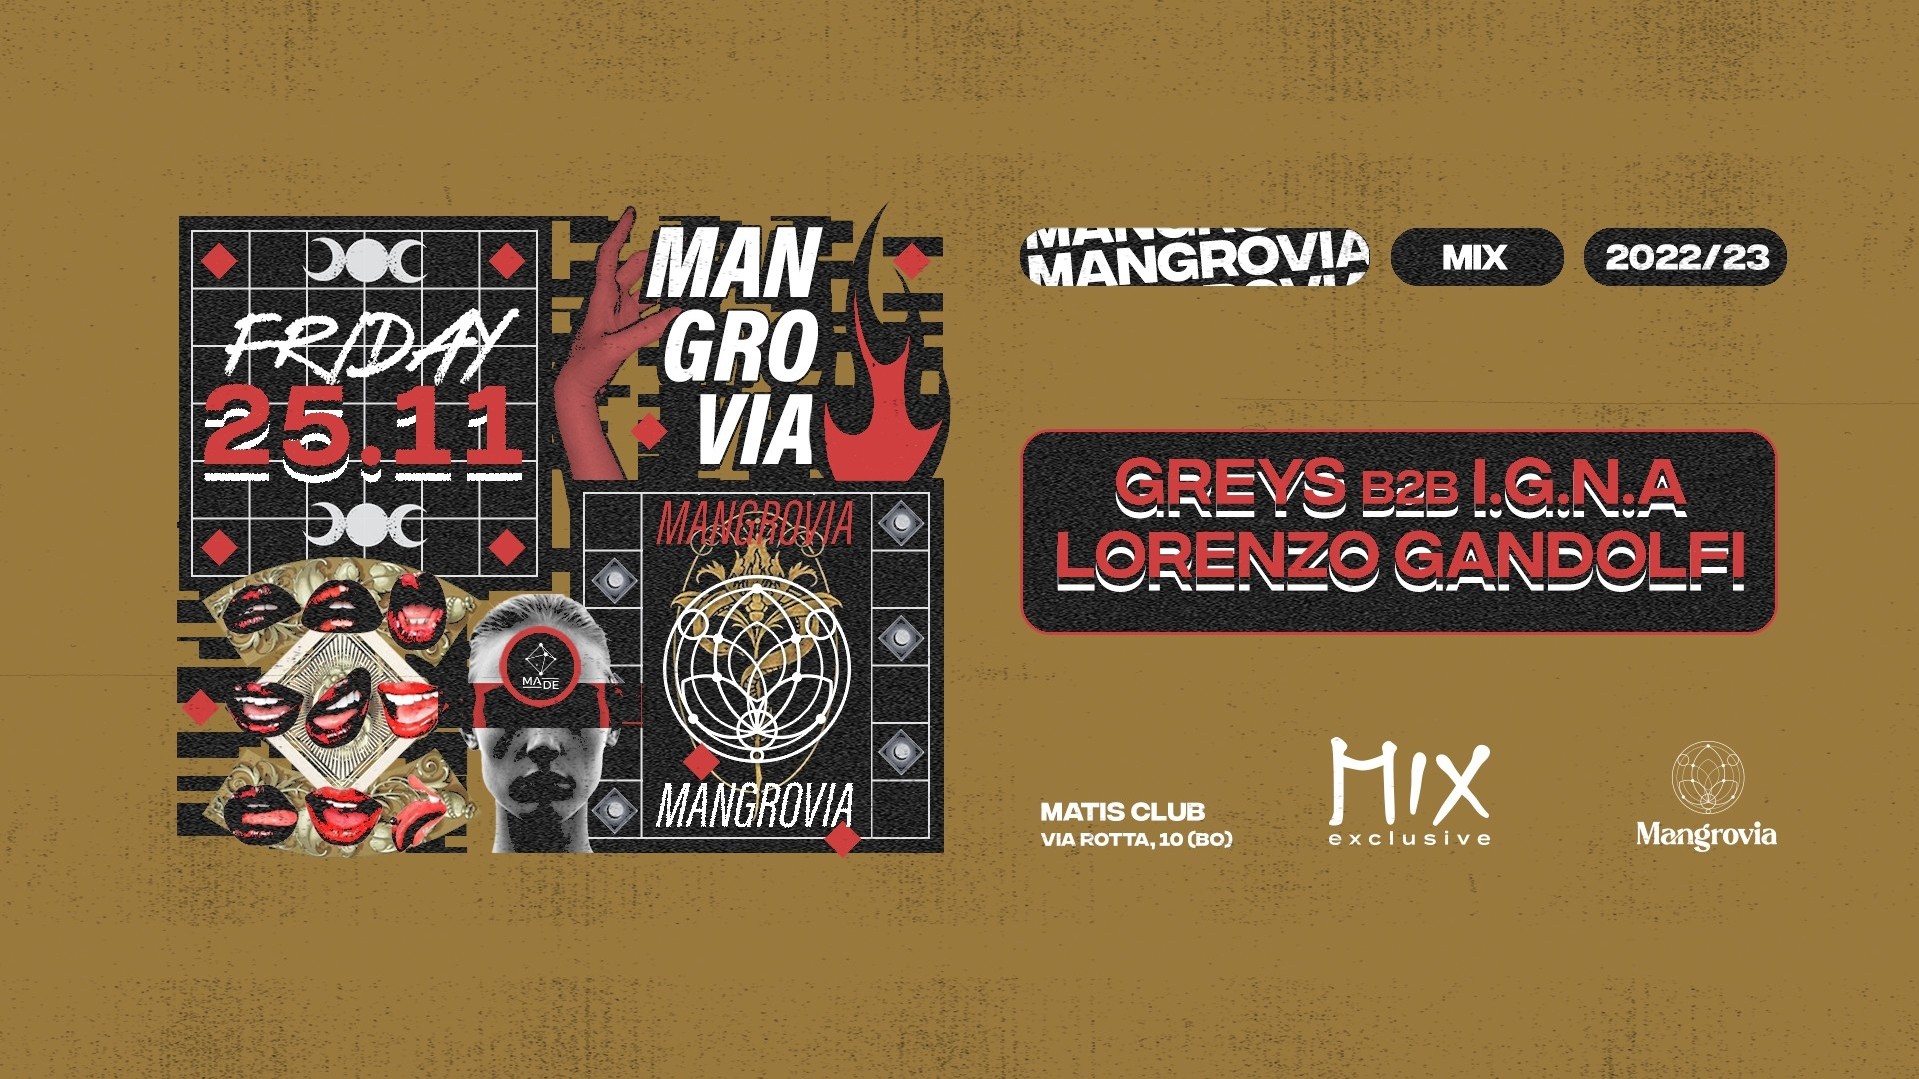 Mix #007 with Mangrovia